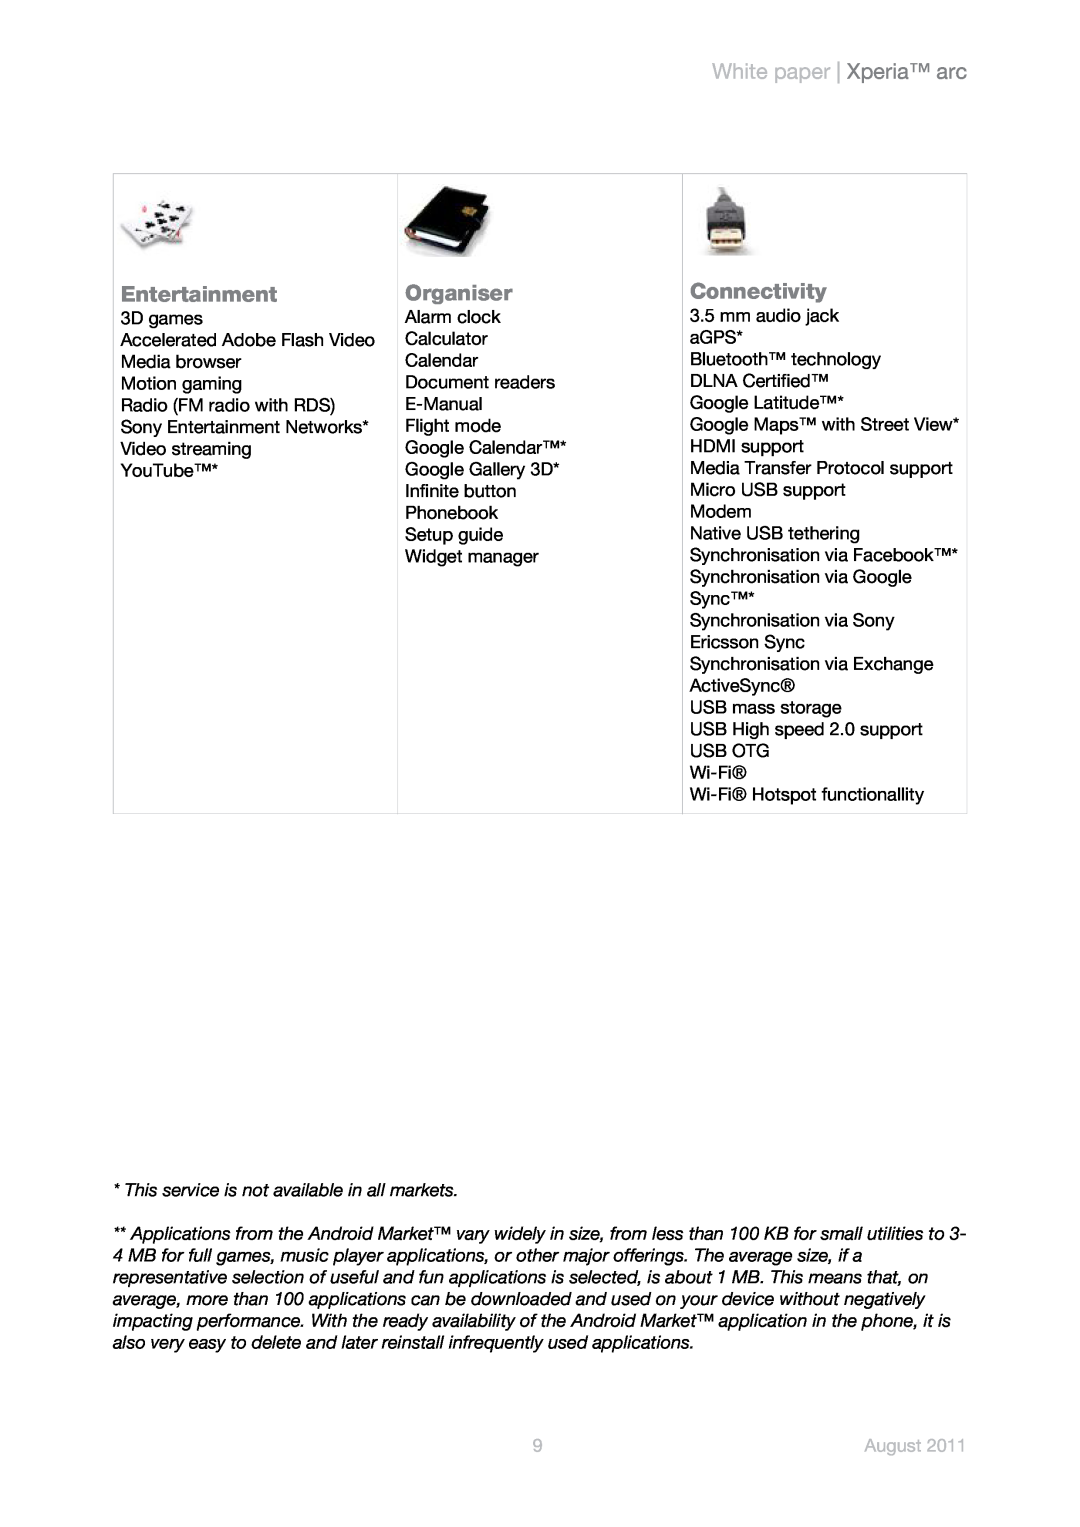 Sony Ericsson LT15i, LT15a manual Entertainment, Organiser, Connectivity, White paper Xperia arc, August 